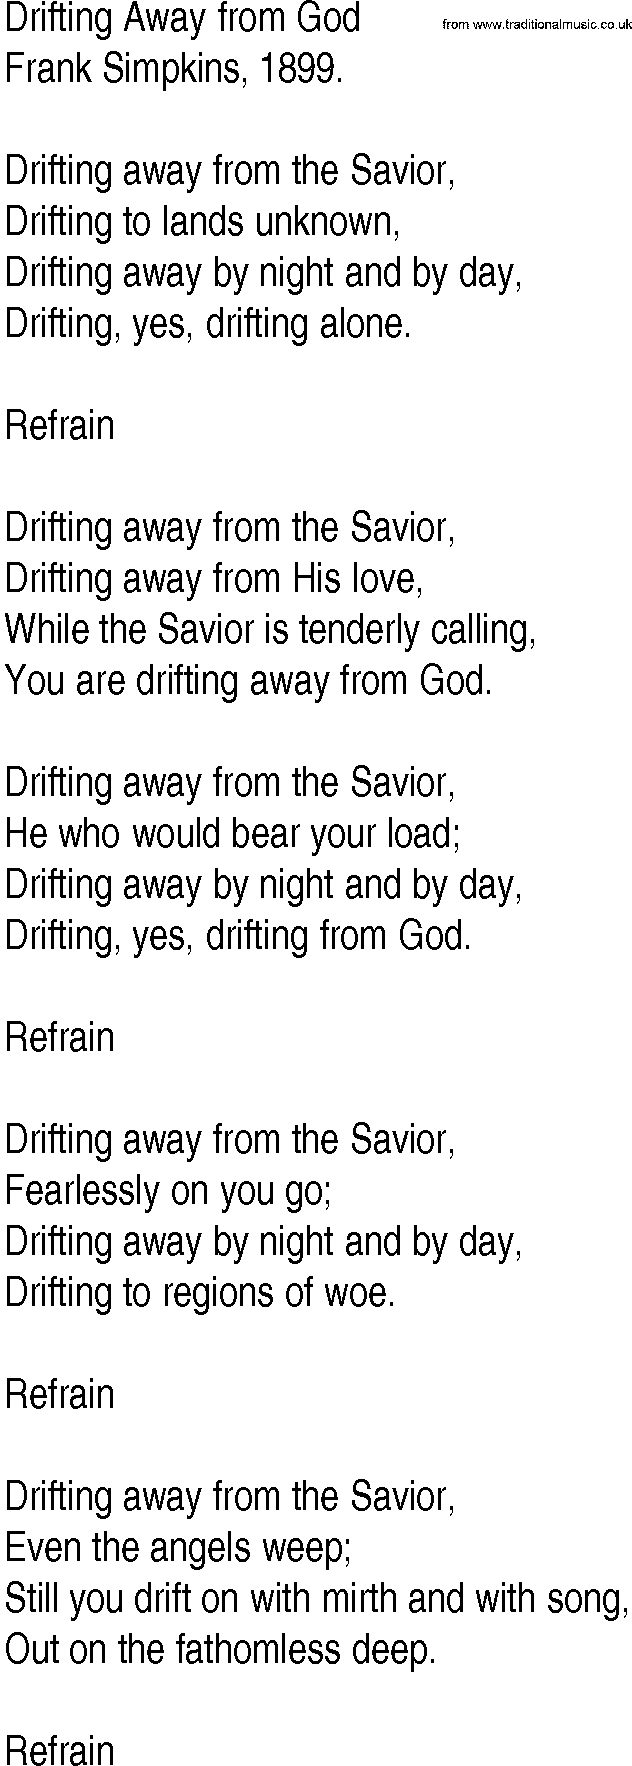 Hymn and Gospel Song: Drifting Away from God by Frank Simpkins lyrics